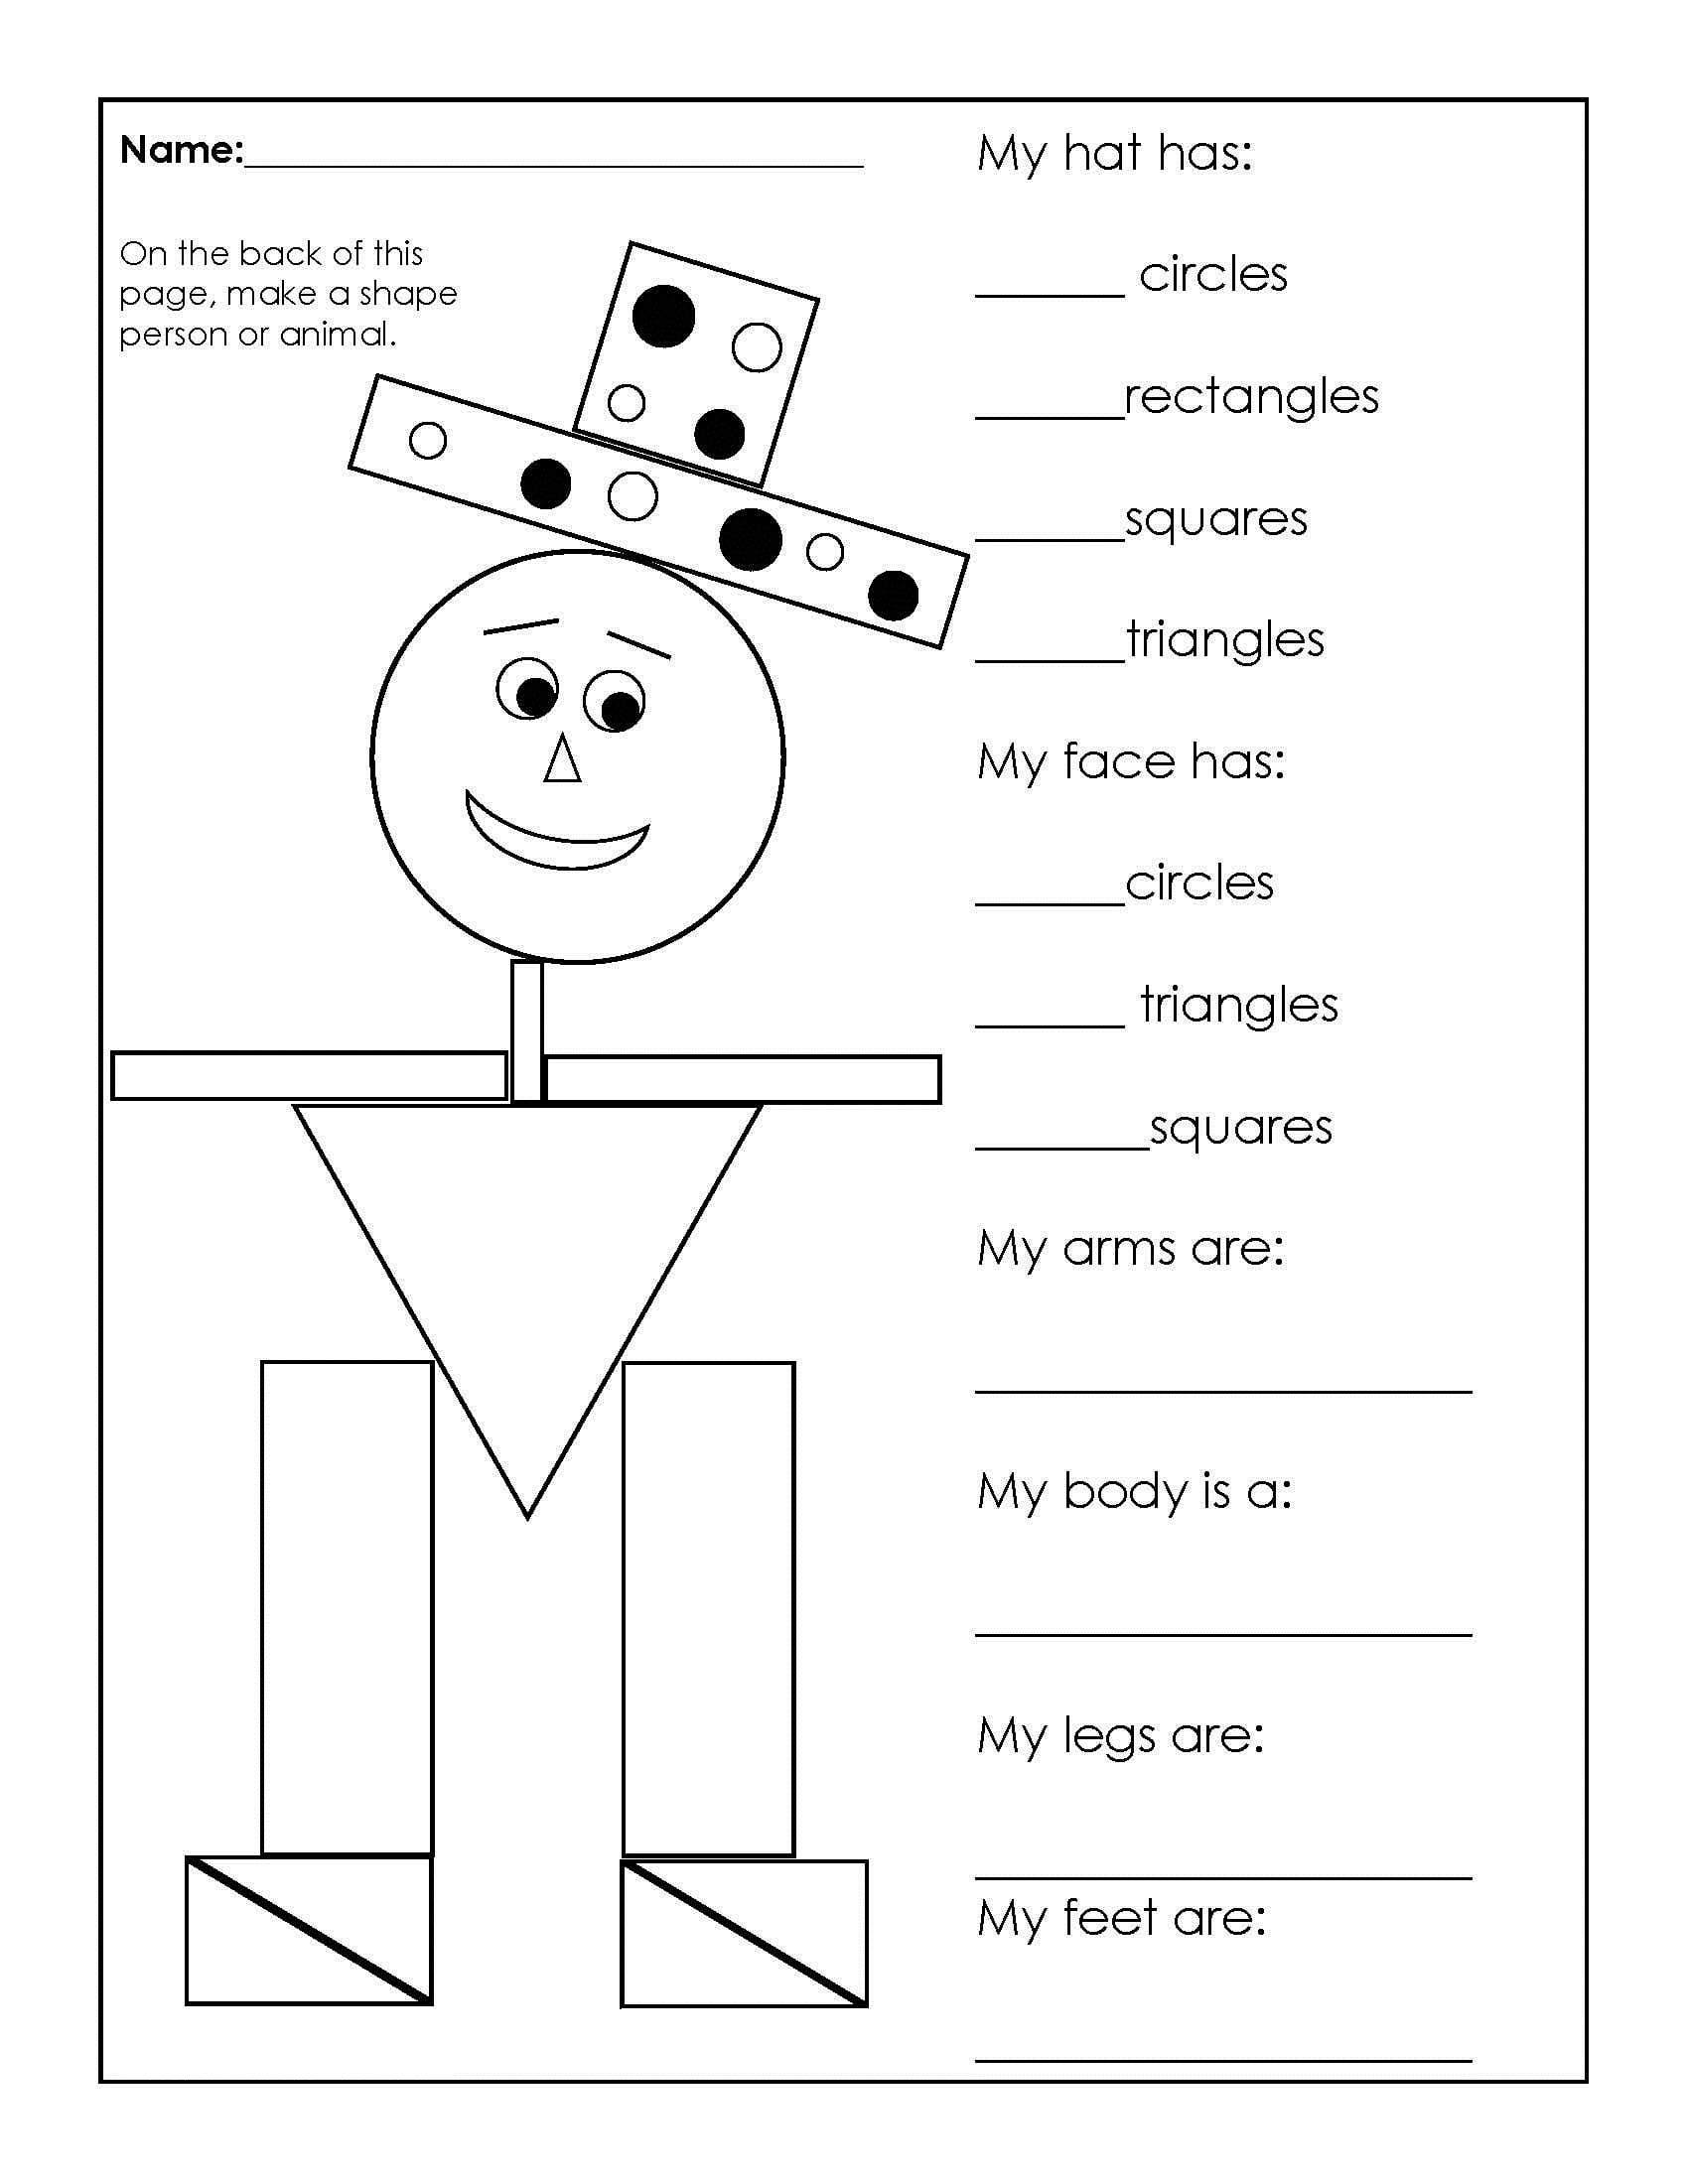 grade-2-math-worksheets-page-2-worksheet-for-shapes-math-solid-shapes